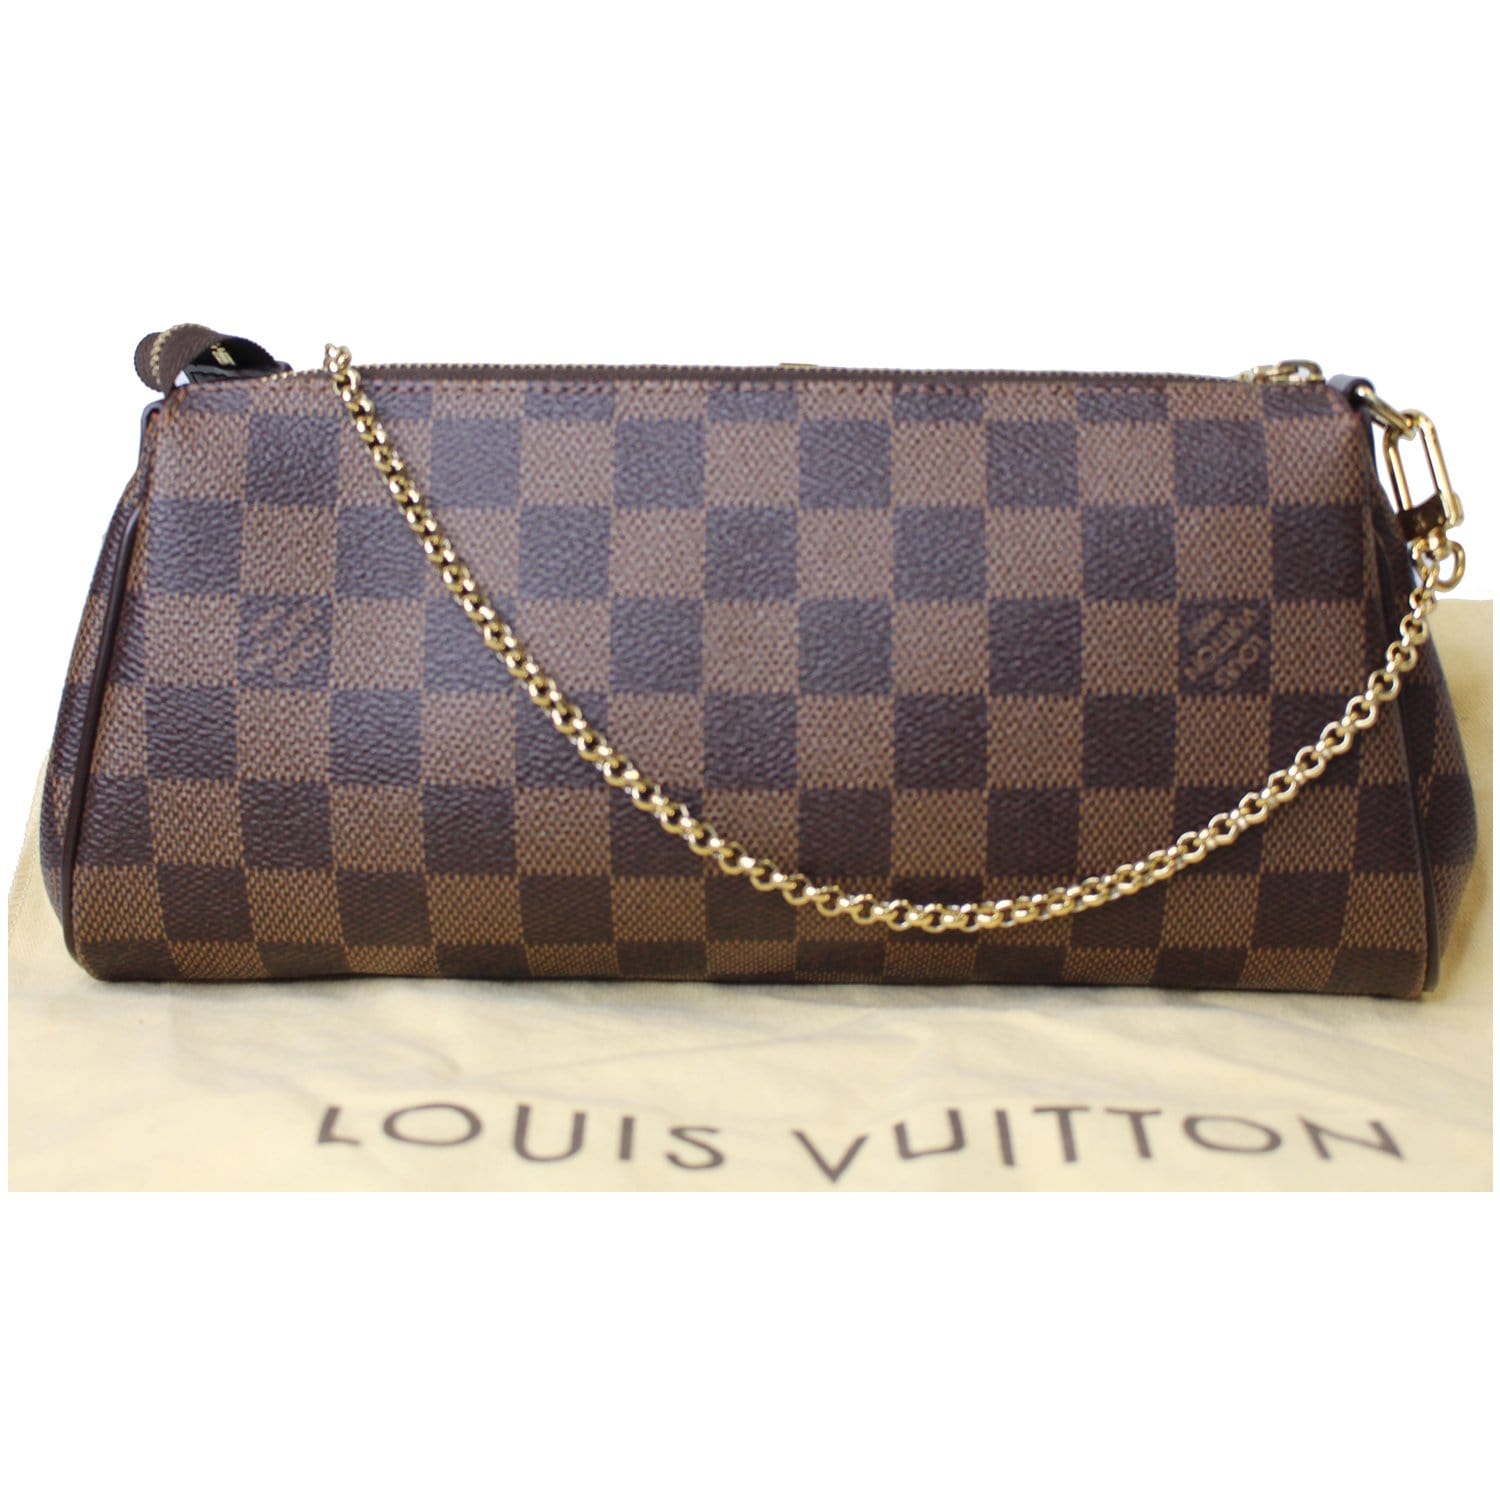 louis vuitton damier eva clutch  Louis vuitton handbags outlet, Vuitton, Louis  vuitton bag